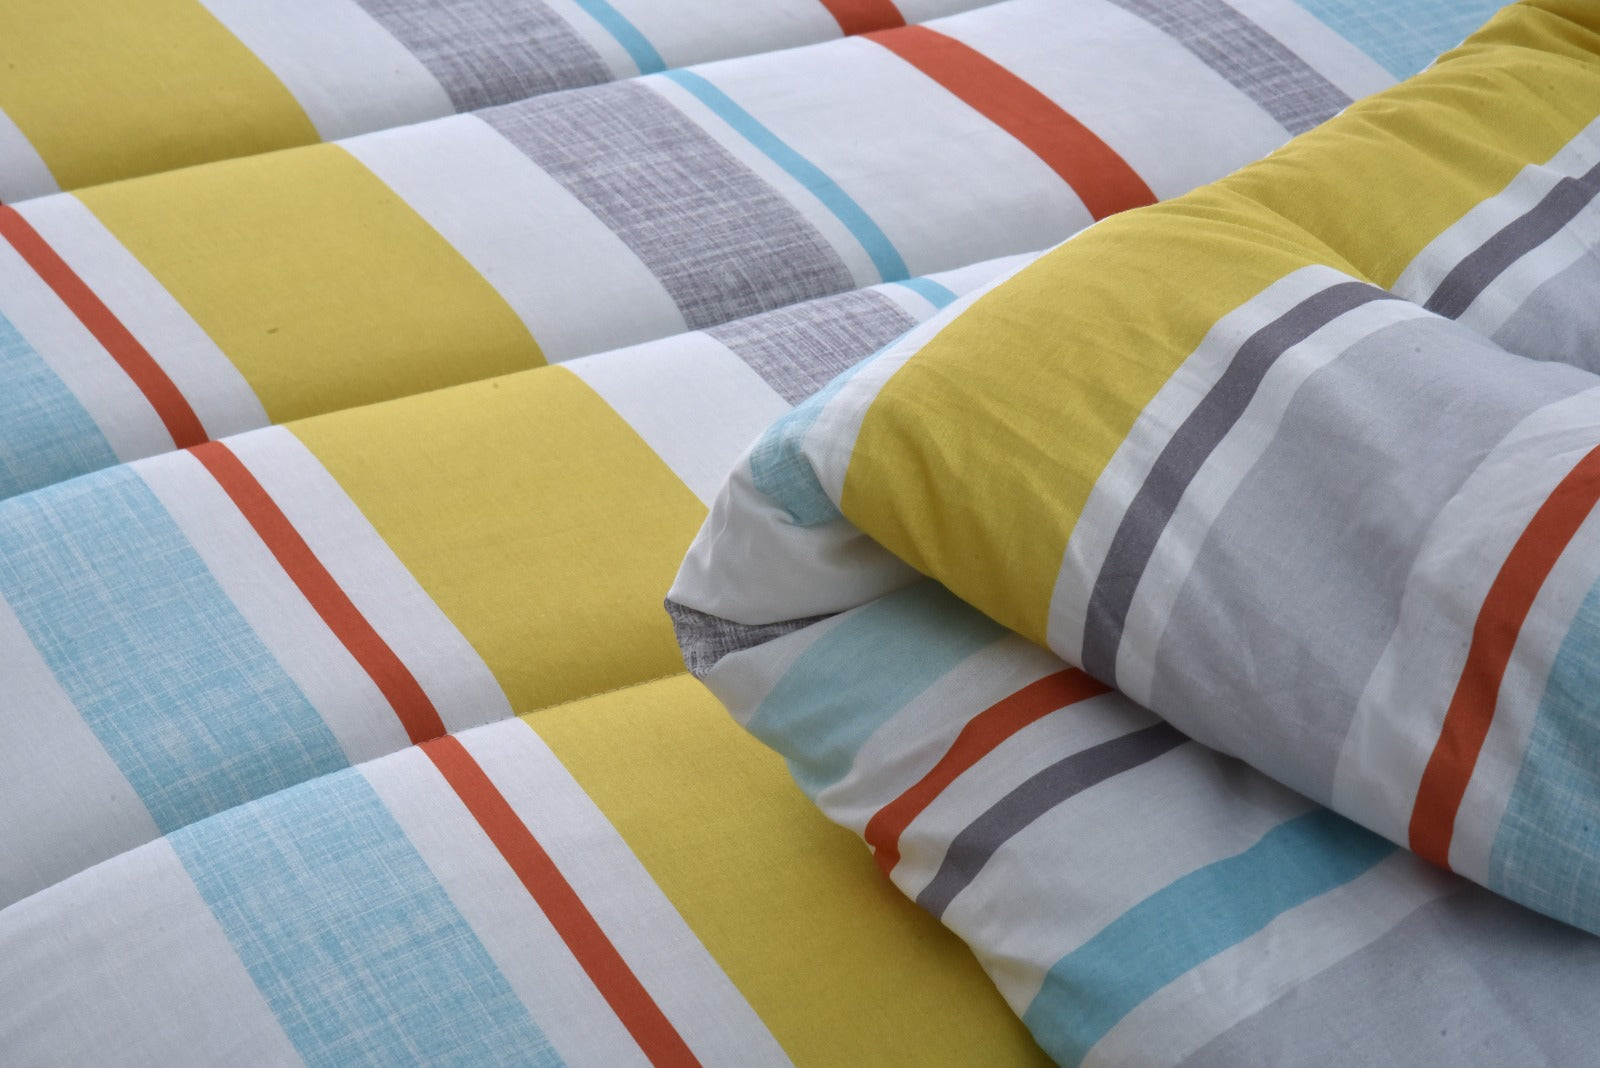 1 PC Double Winter Comforter-Multi Stripes Apricot